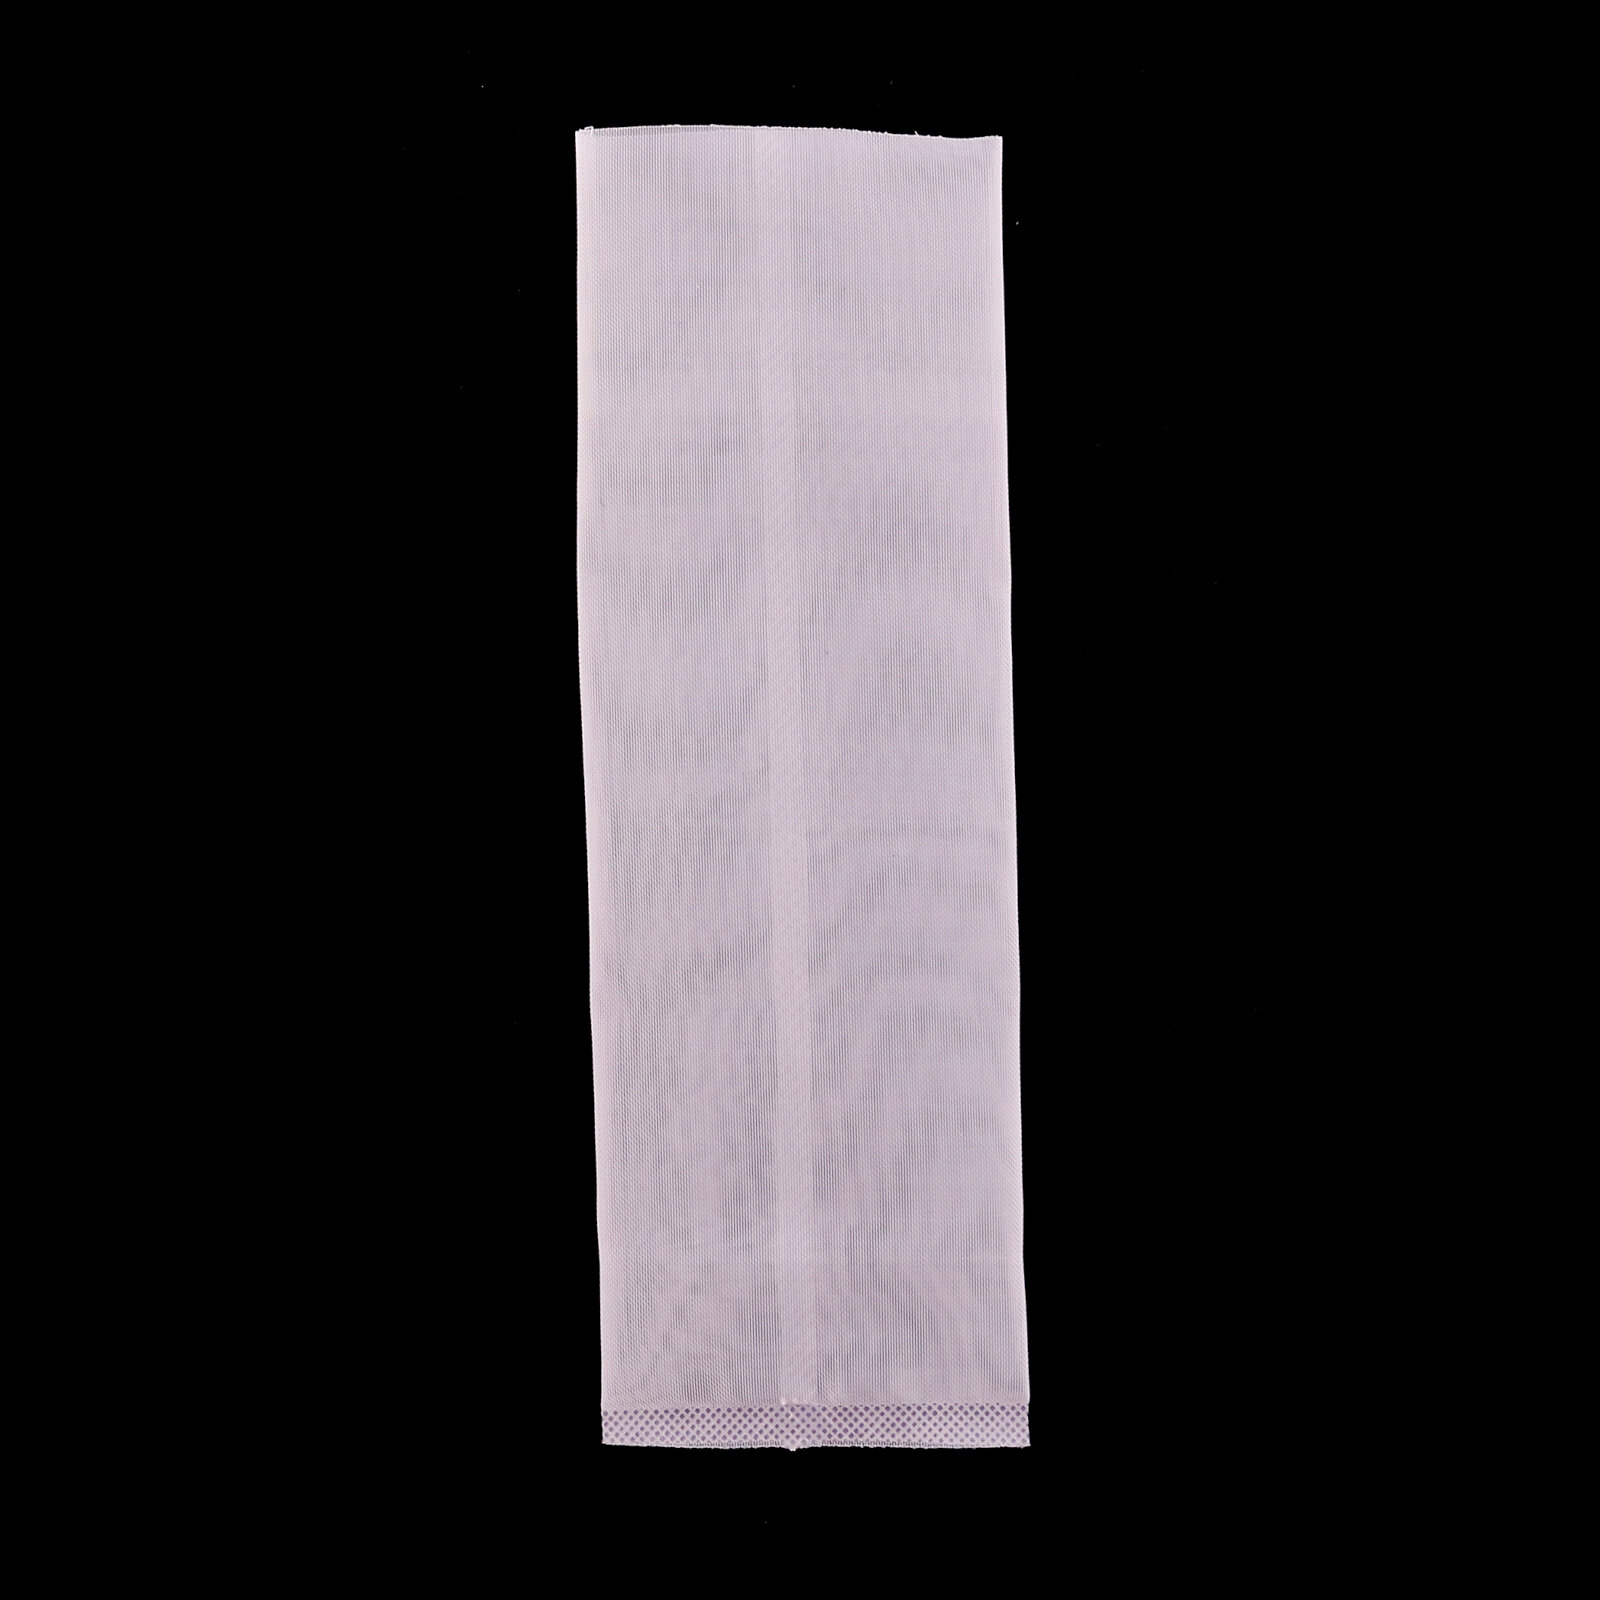 10 pcs. Rosin Bags 5 x 11cm | div. µm sieve sizes